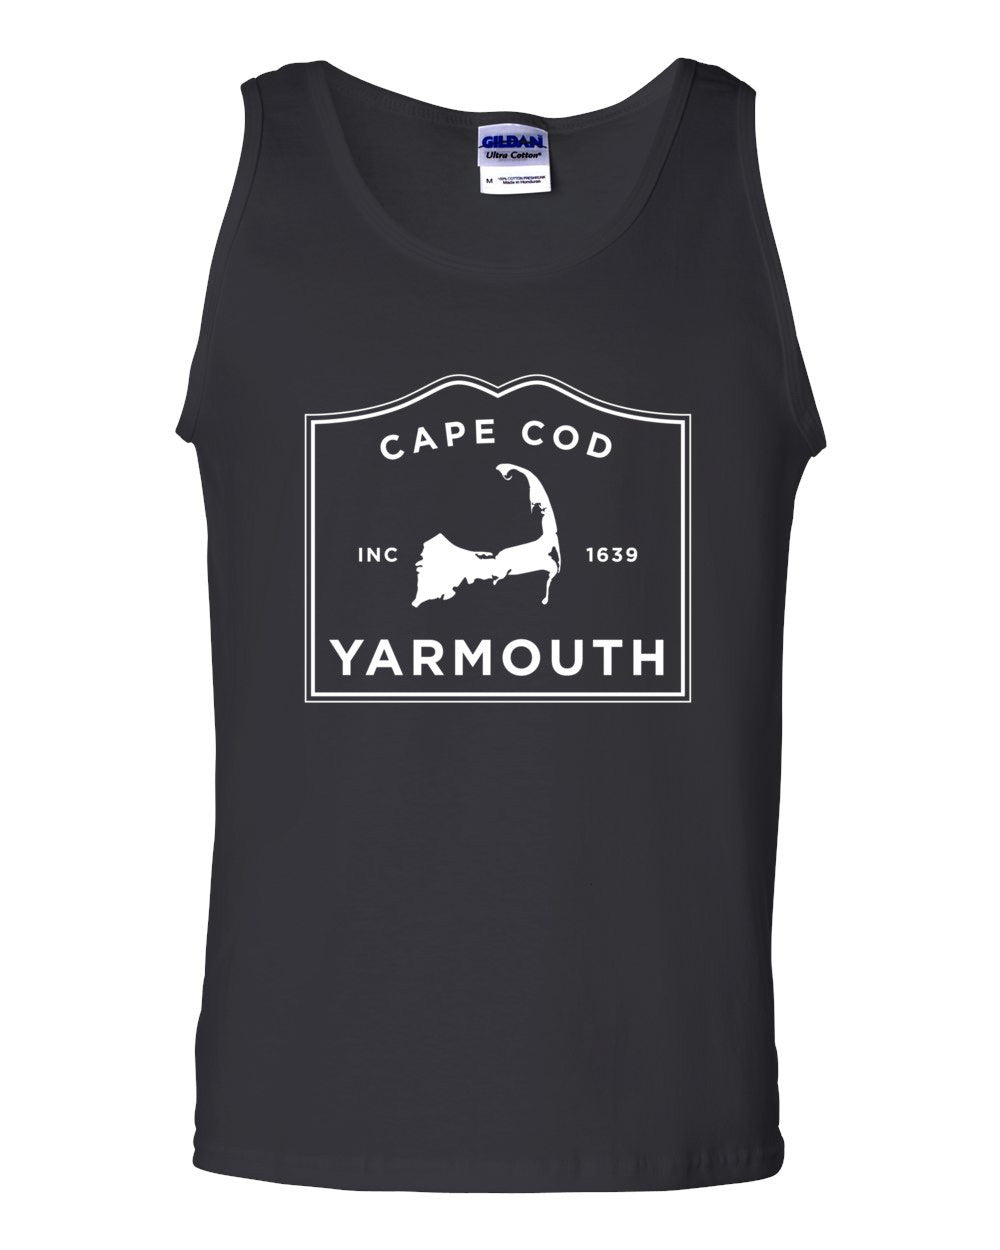 Yarmouth Cape Cod Tank Top